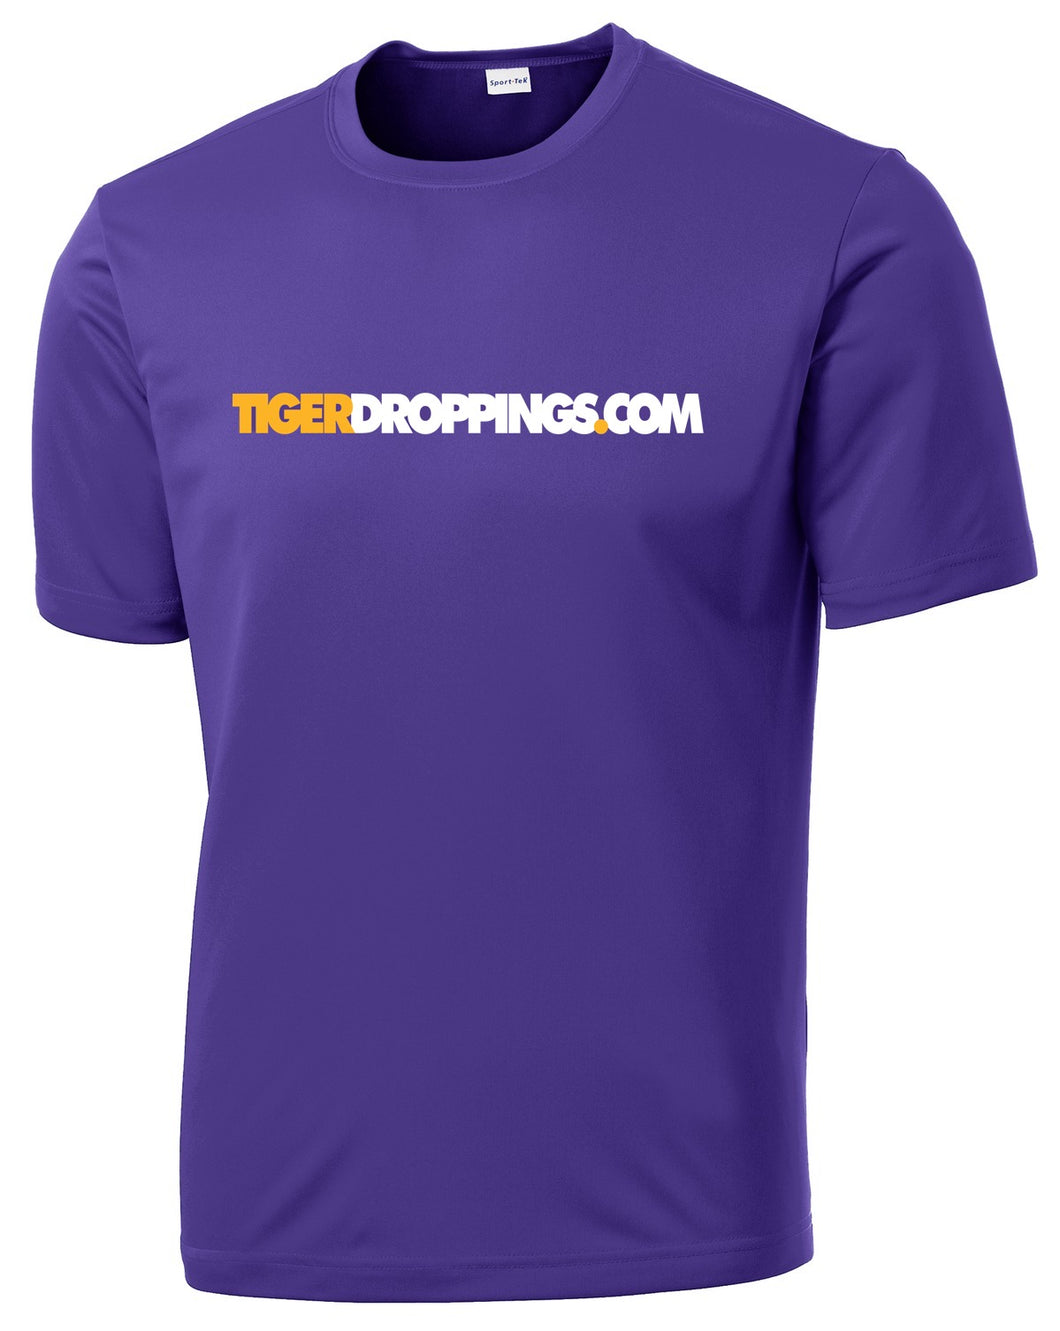 Dot Com T-Shirt - Purple